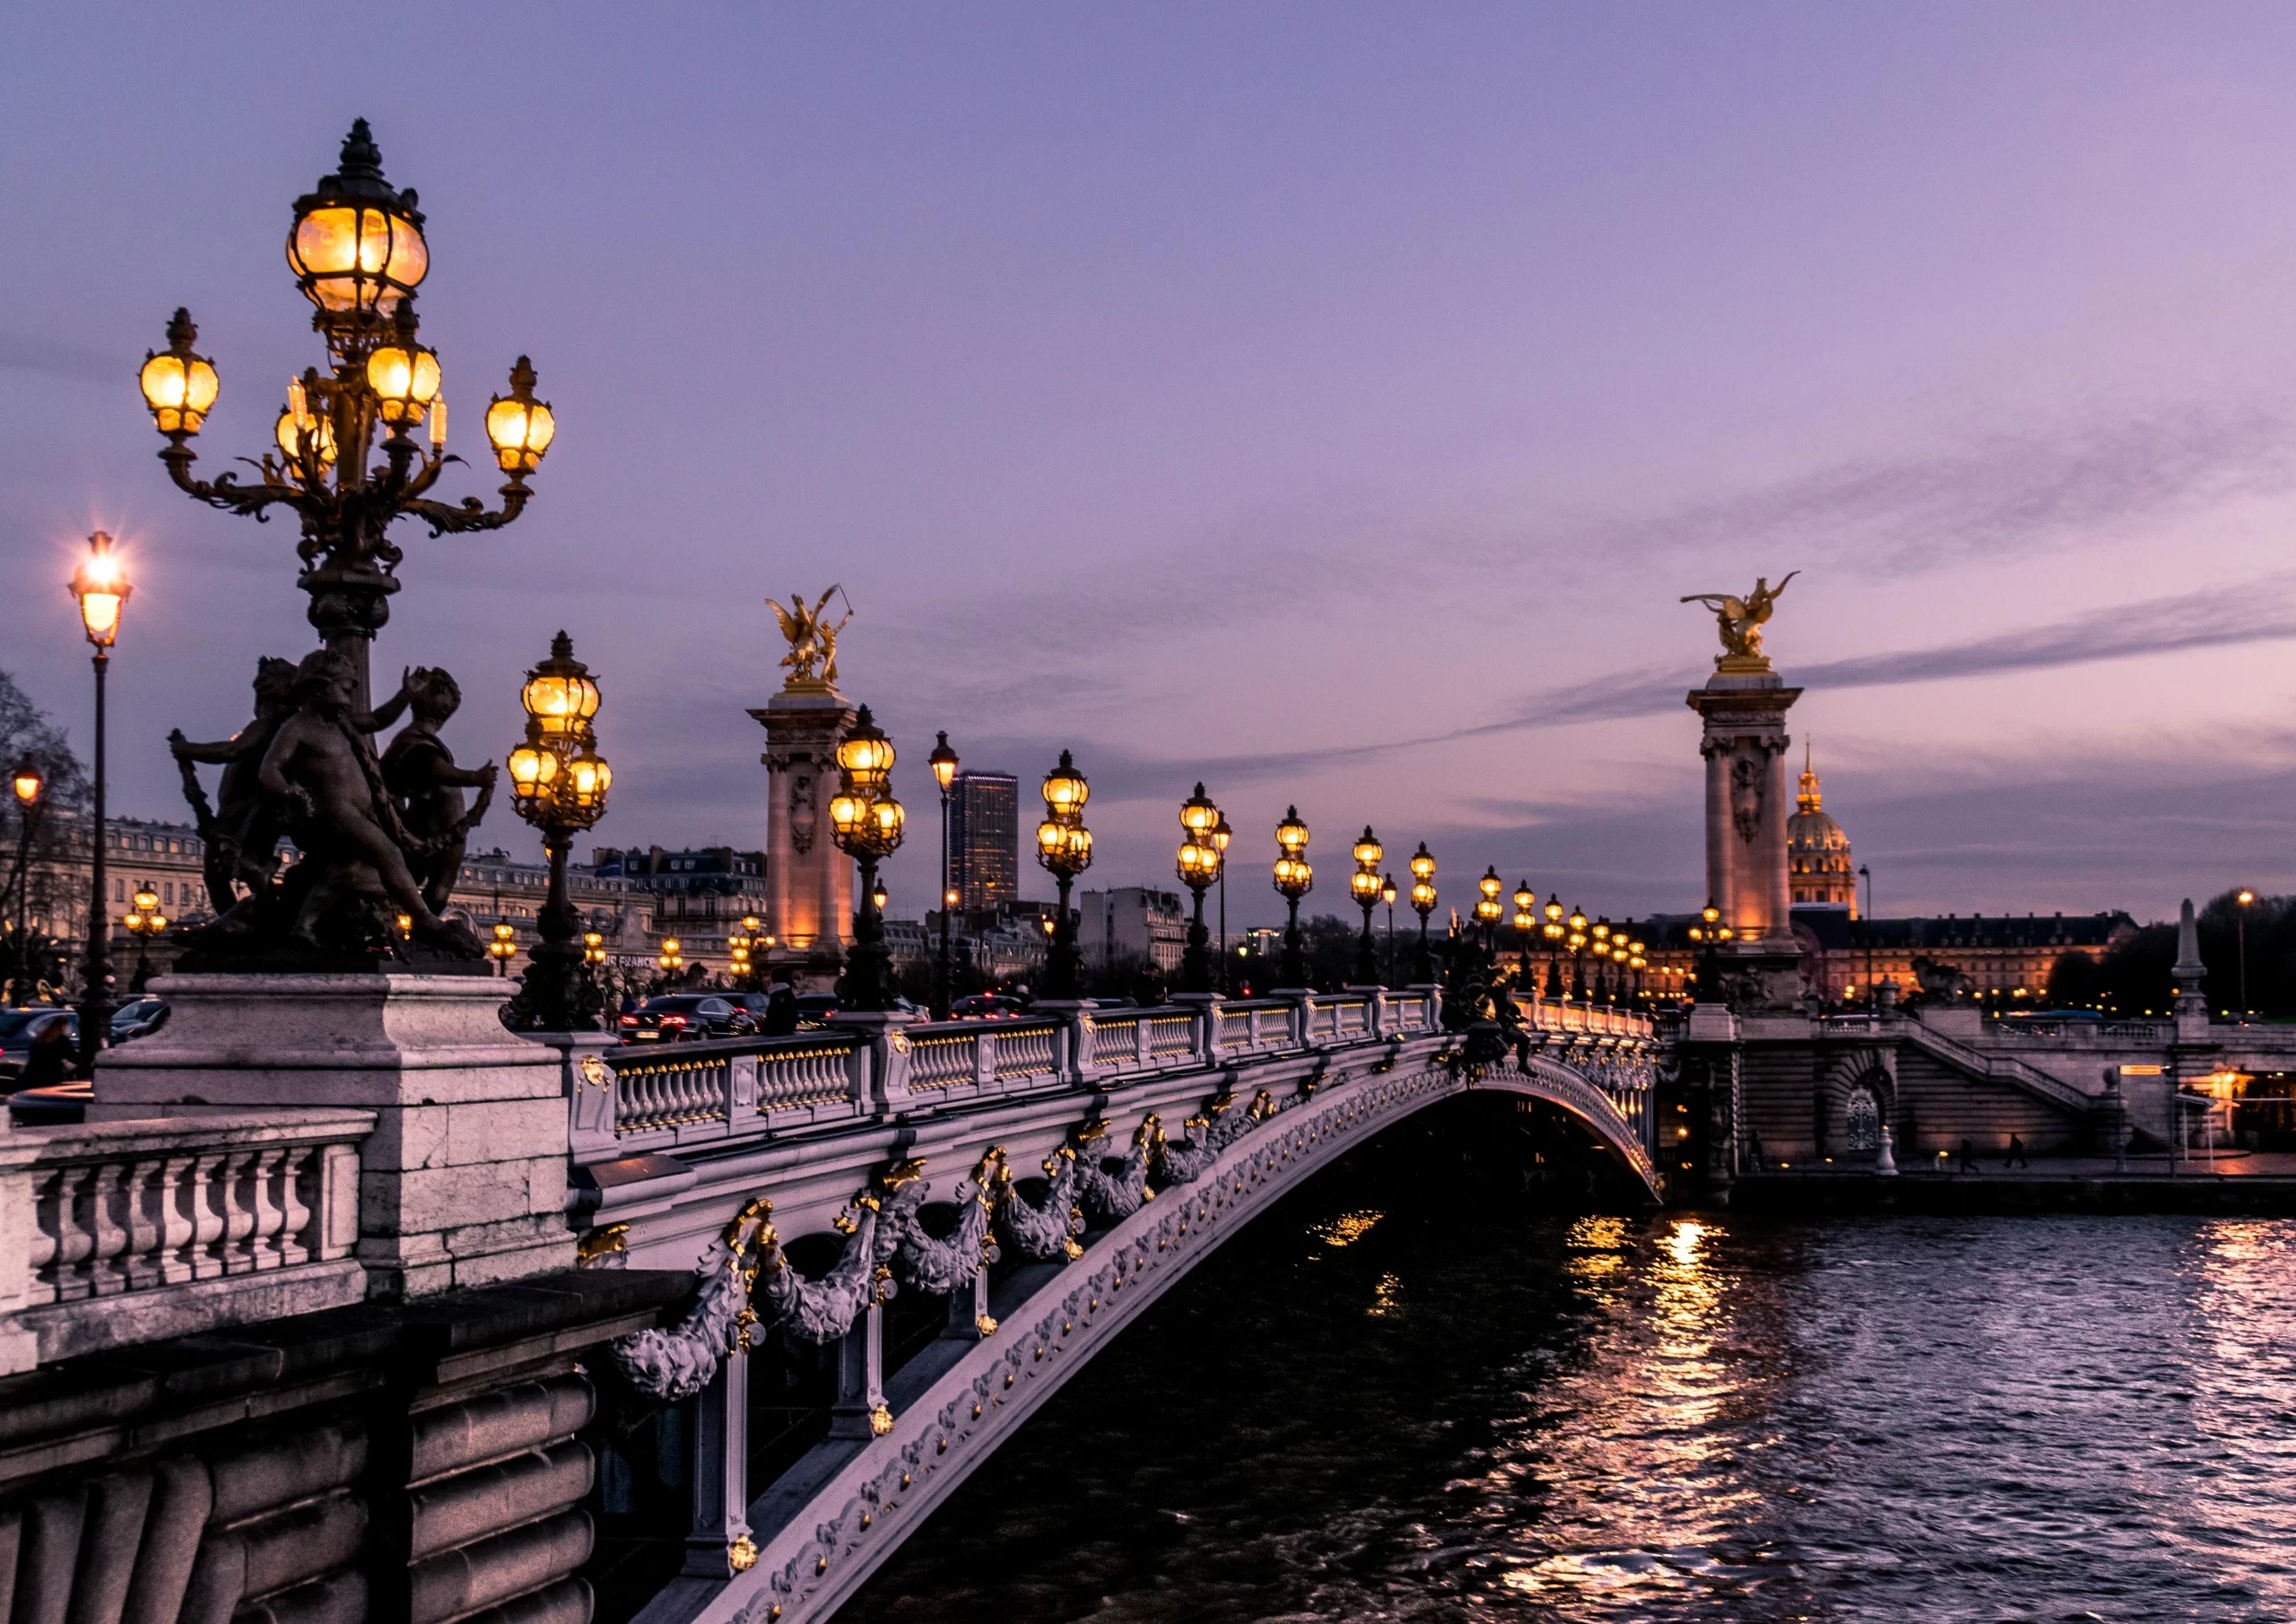 Paris, France<br />
Published on July 12, 2017<br />
NIKON CORPORATION, NIKON D5300<br />
Free to use under the Unsplash License<br />
Parisian bridge